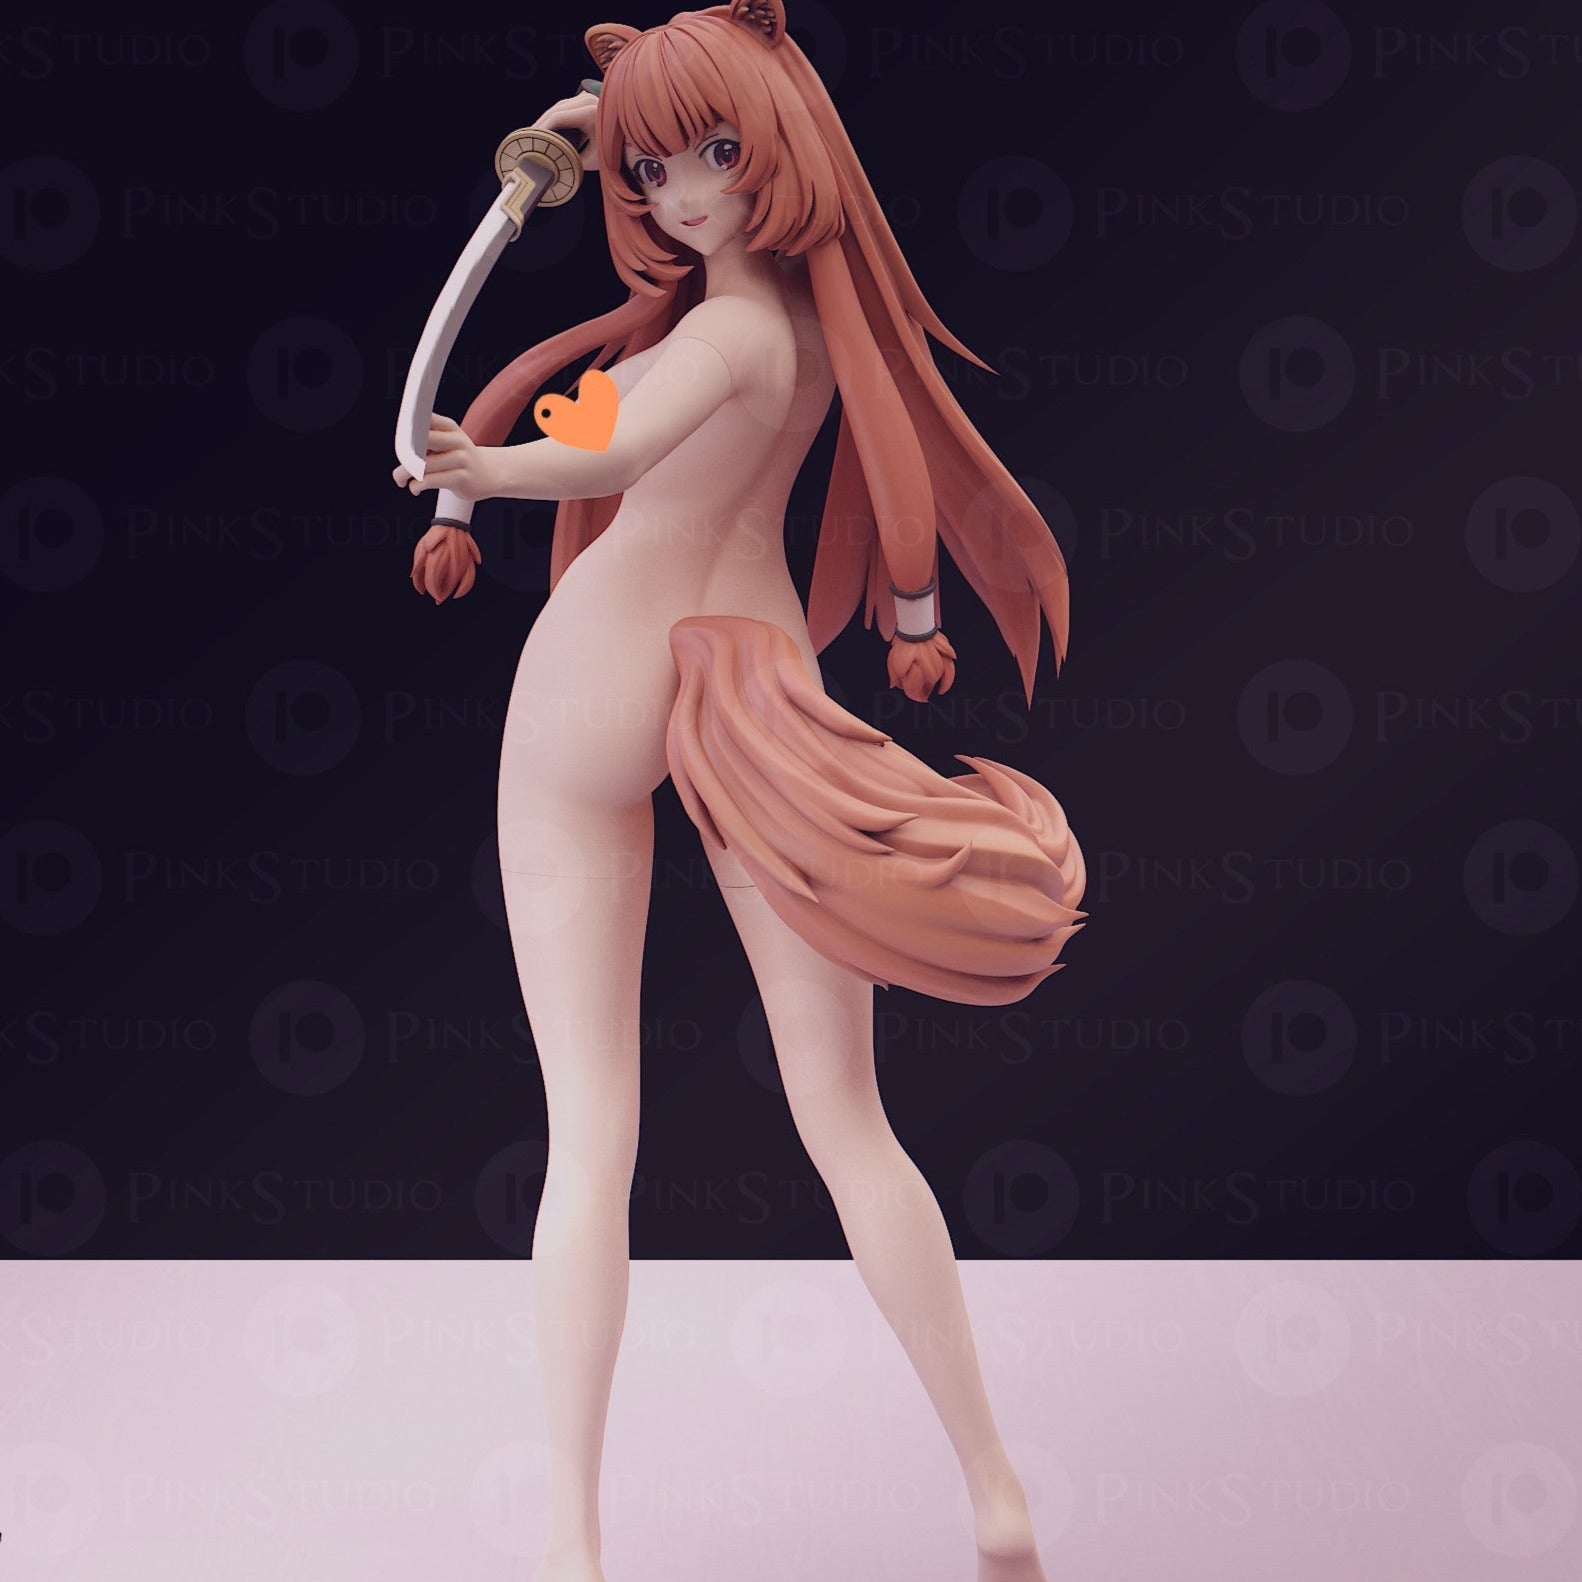 Hakama Raphtalia NSFW 3D Printed Anime Figurine Fanart by Pink Studio